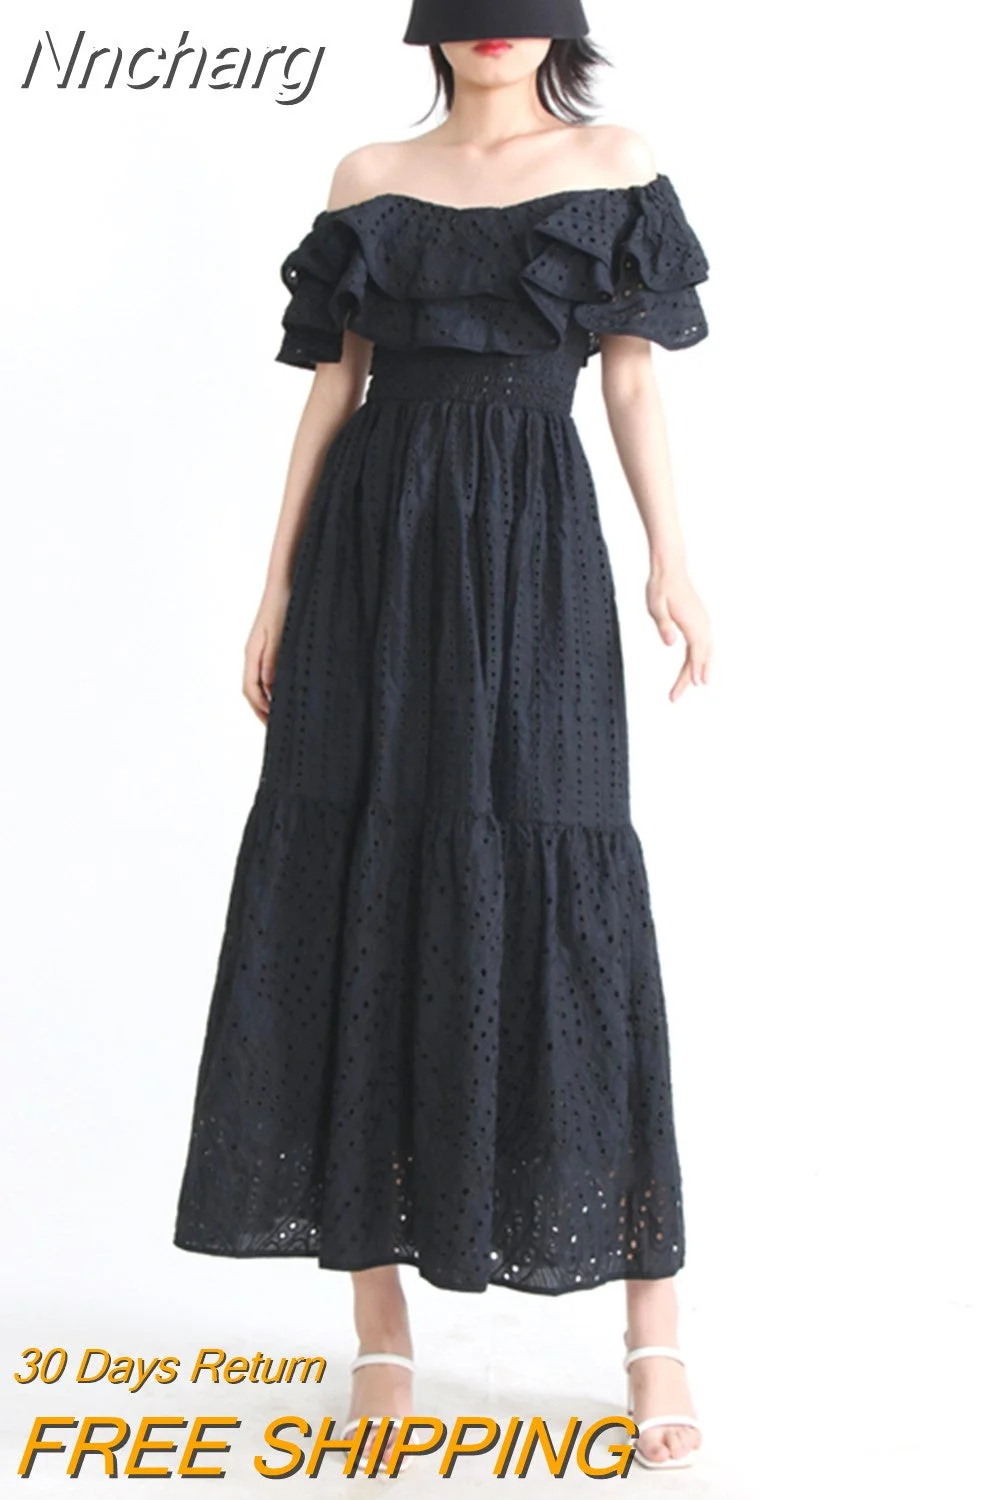 Nncharge Embroidery Elegant Dress For Women Slash Neck Short Sleeve High Waist Cut Out Midi Dresses Female Summer Clothing